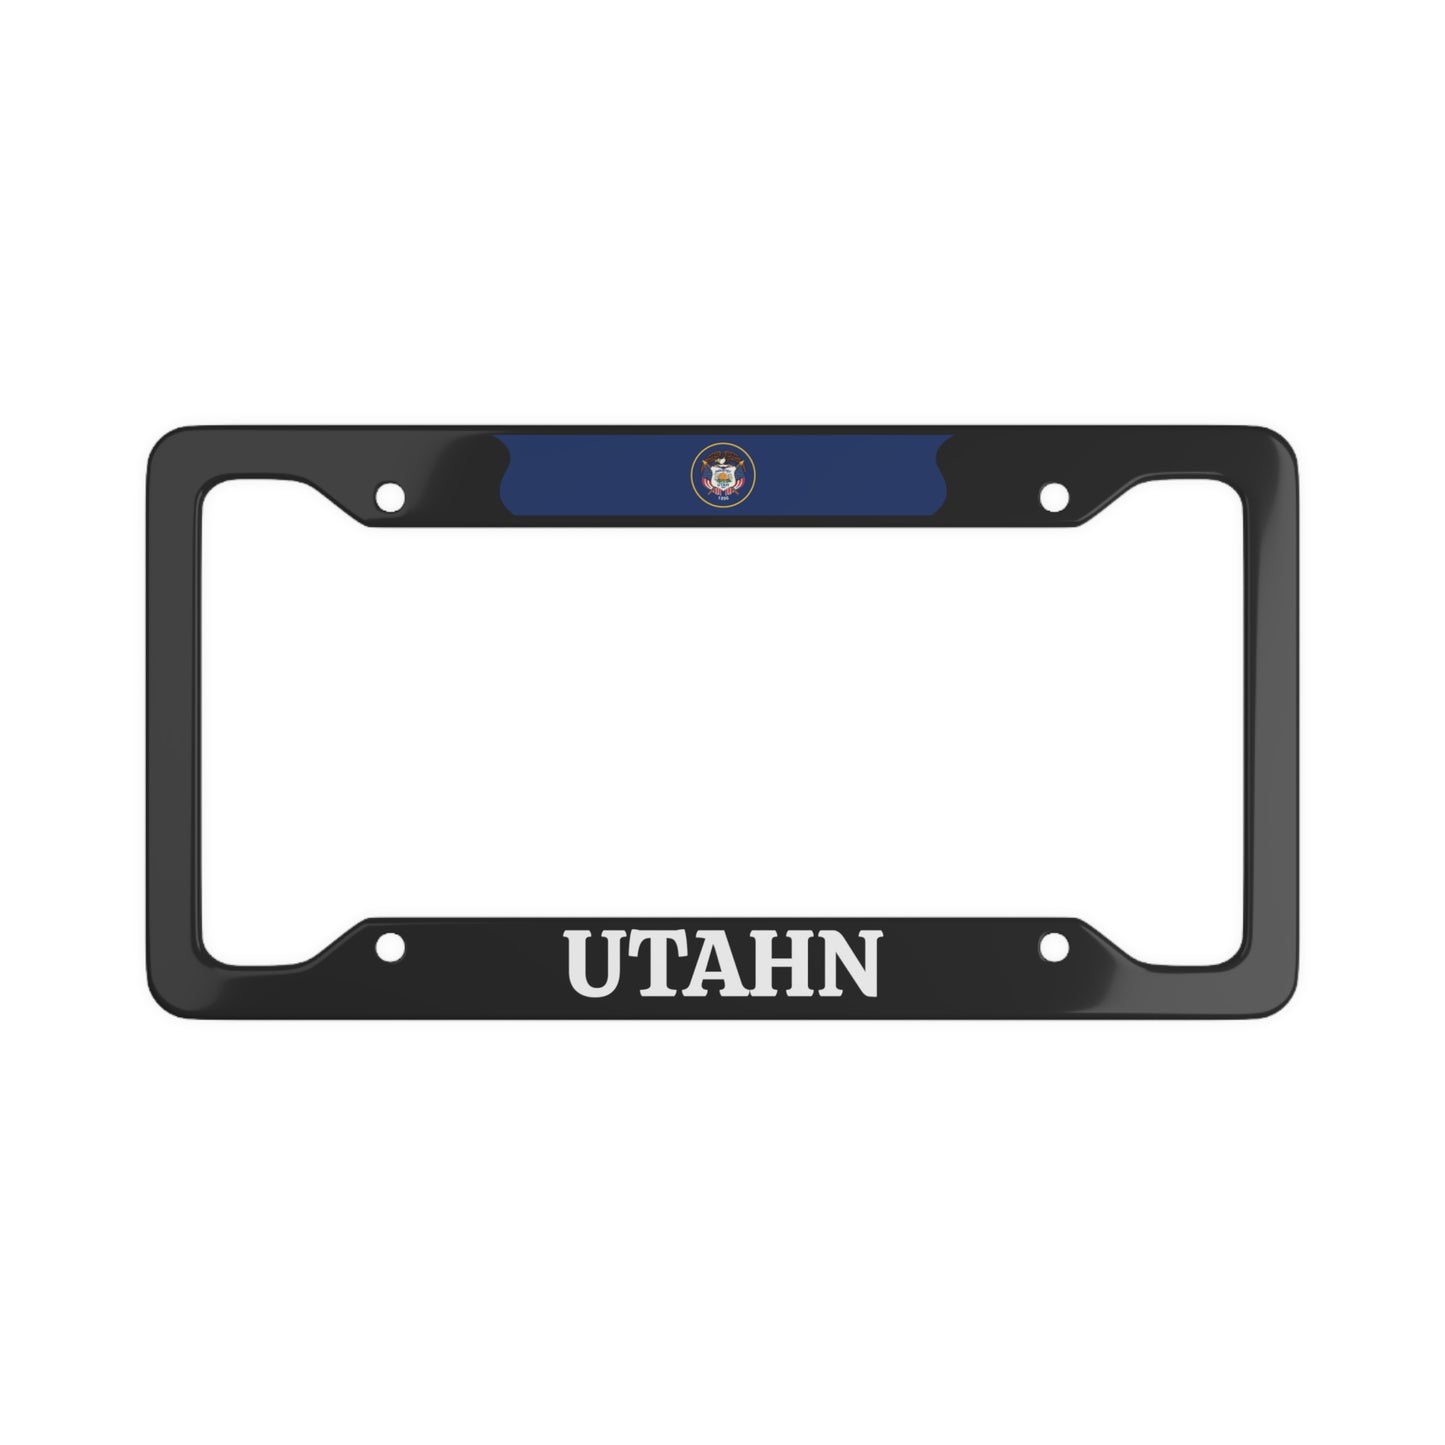 Utahn, Utah State, USA License Plate Frame